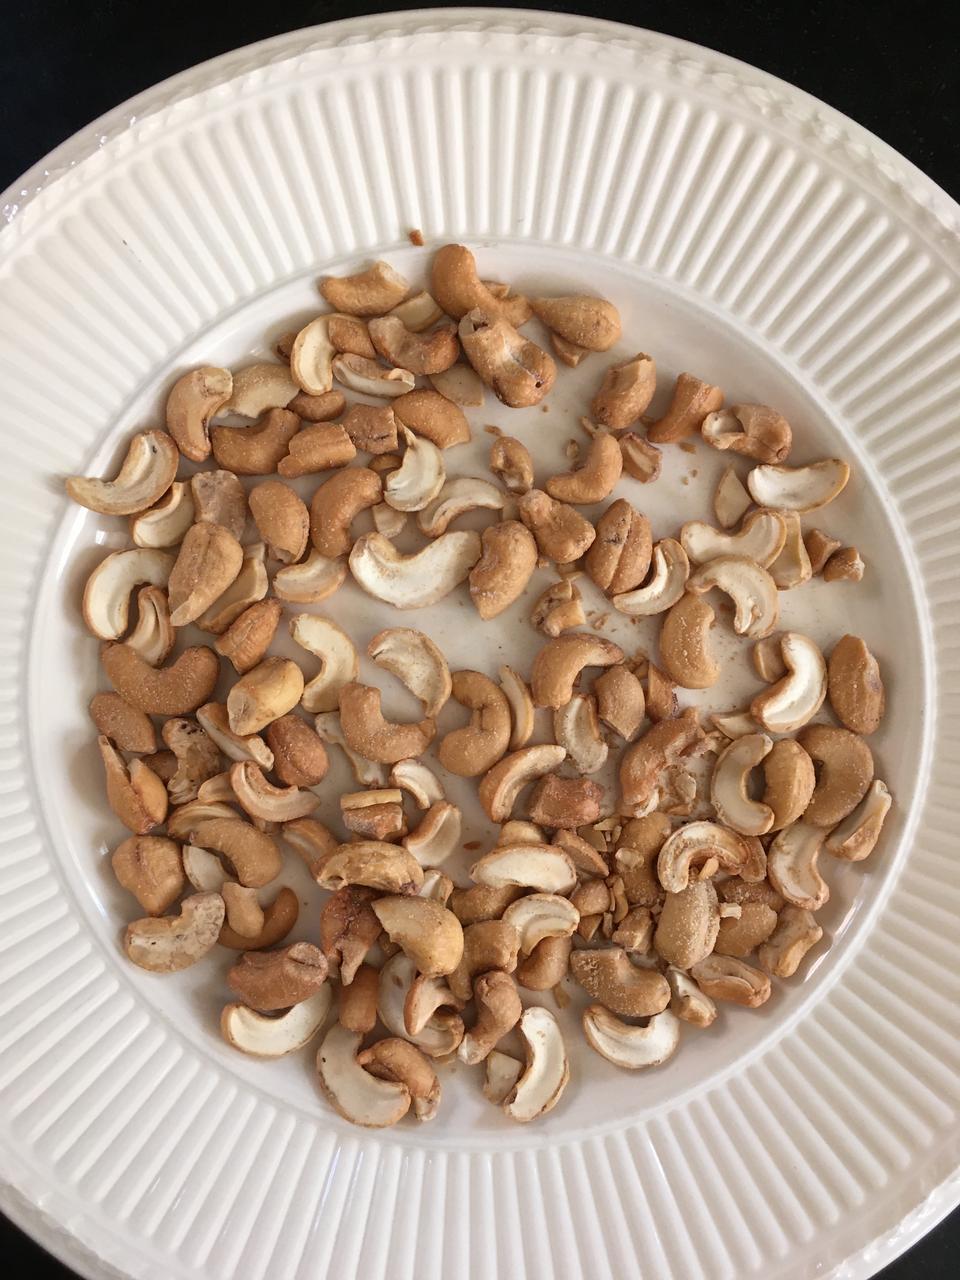 Trader Joe's partial cashews, halves, and pieces